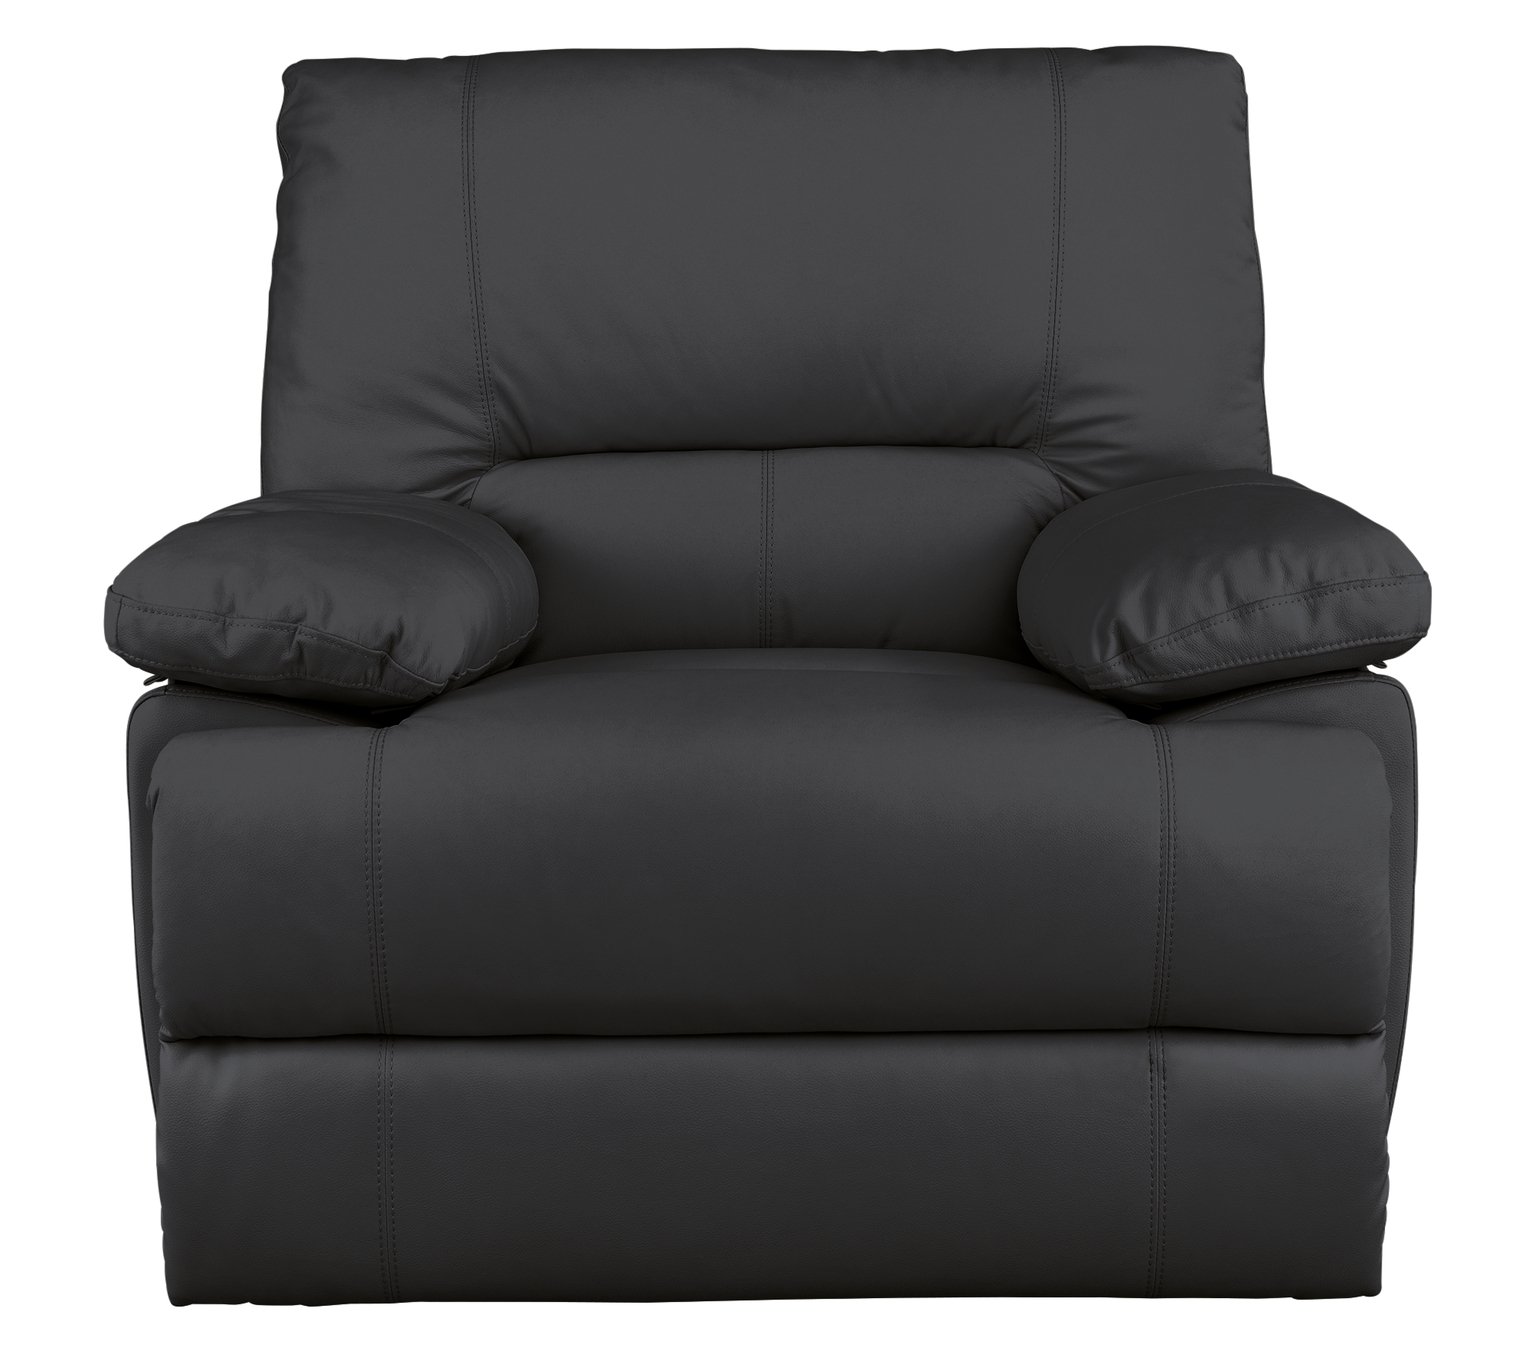 Argos Home Devlin Faux Leather Manual Recliner Chair - Black